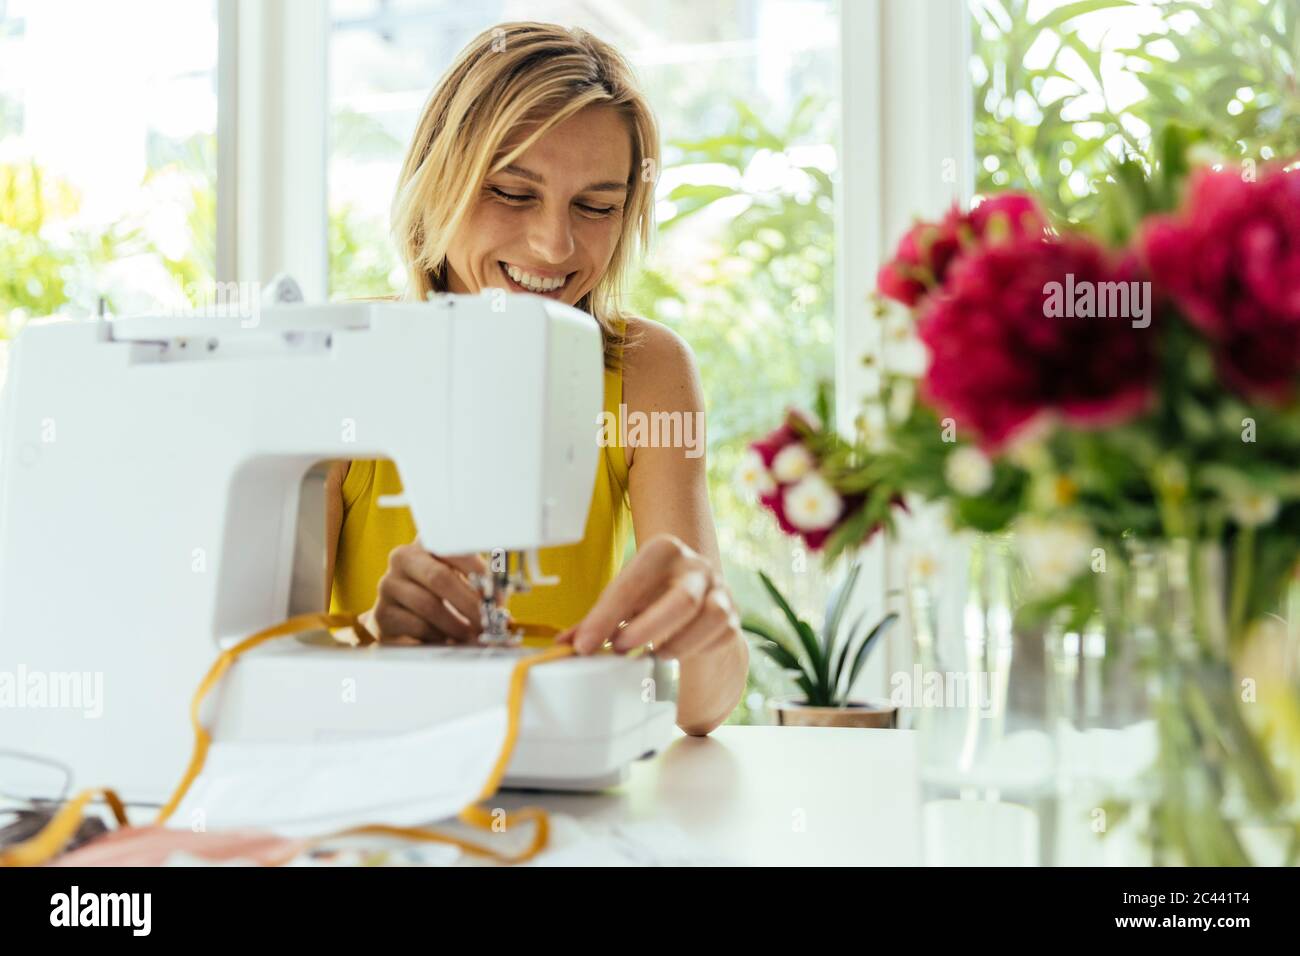 Smiling woman sewing face masks at home Stock Photo